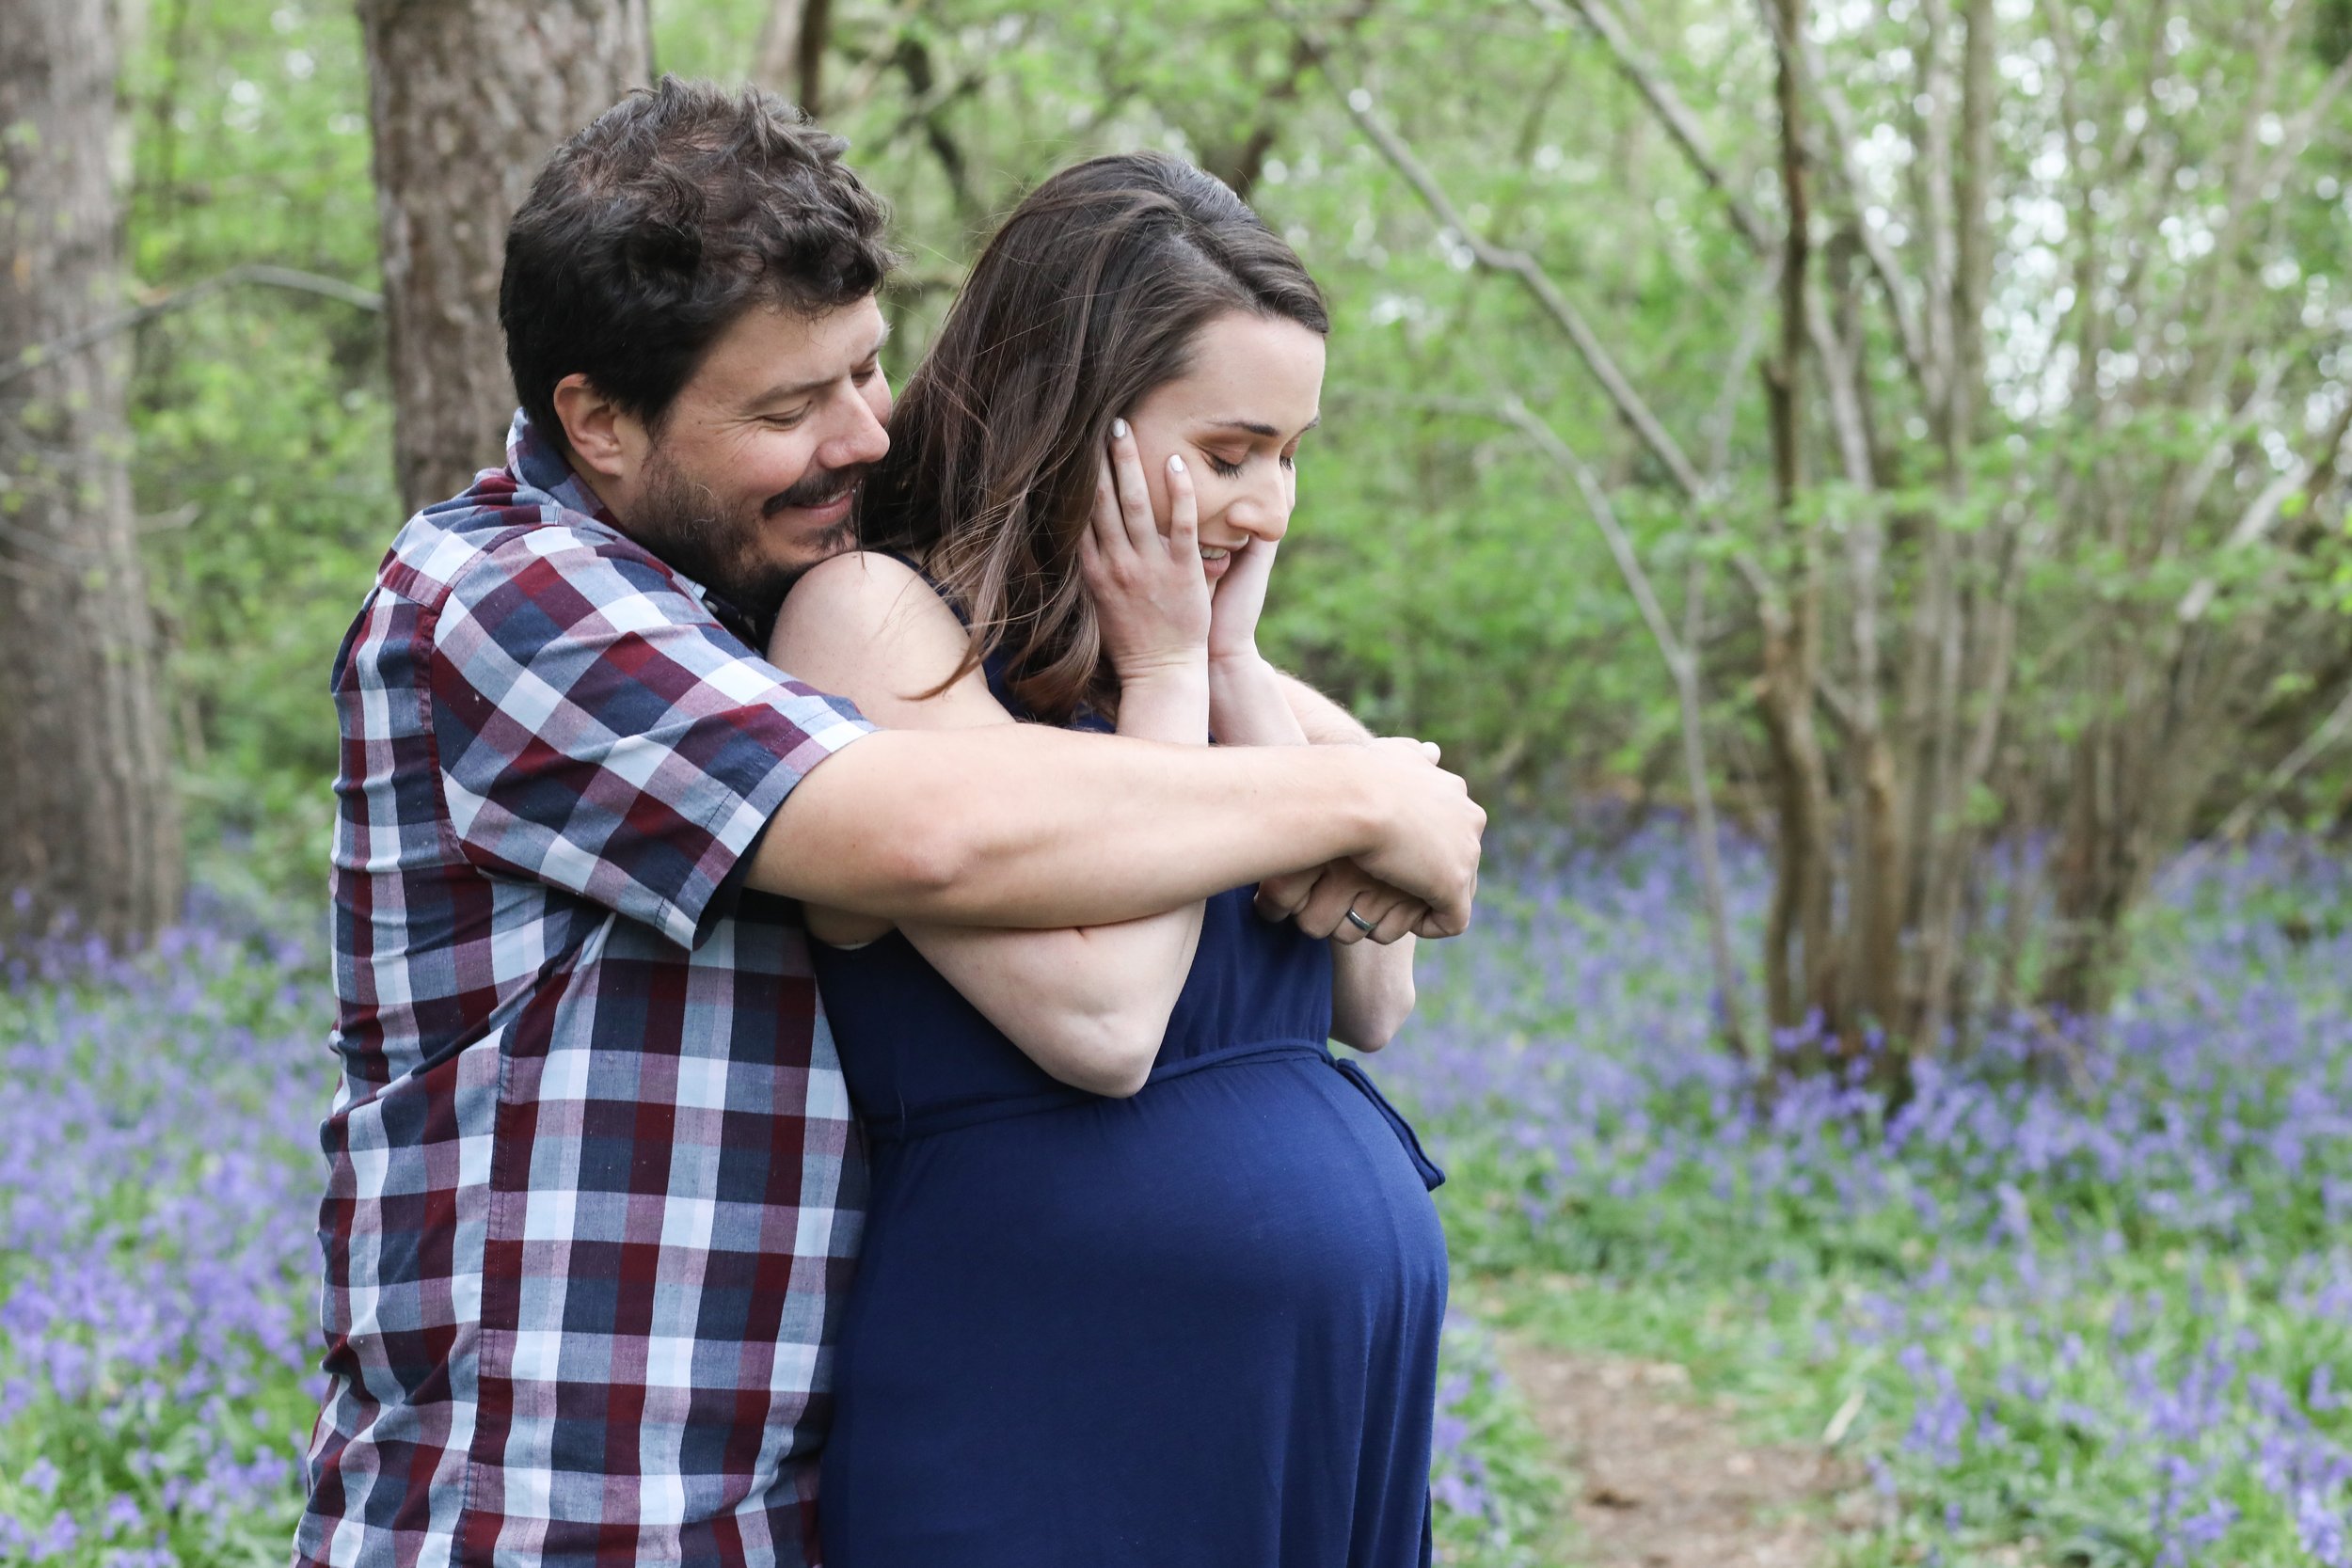 Maternity photo shoot in Berkshire | Bluebell pregnancy photos with Sarah & Bob106 choice .JPG